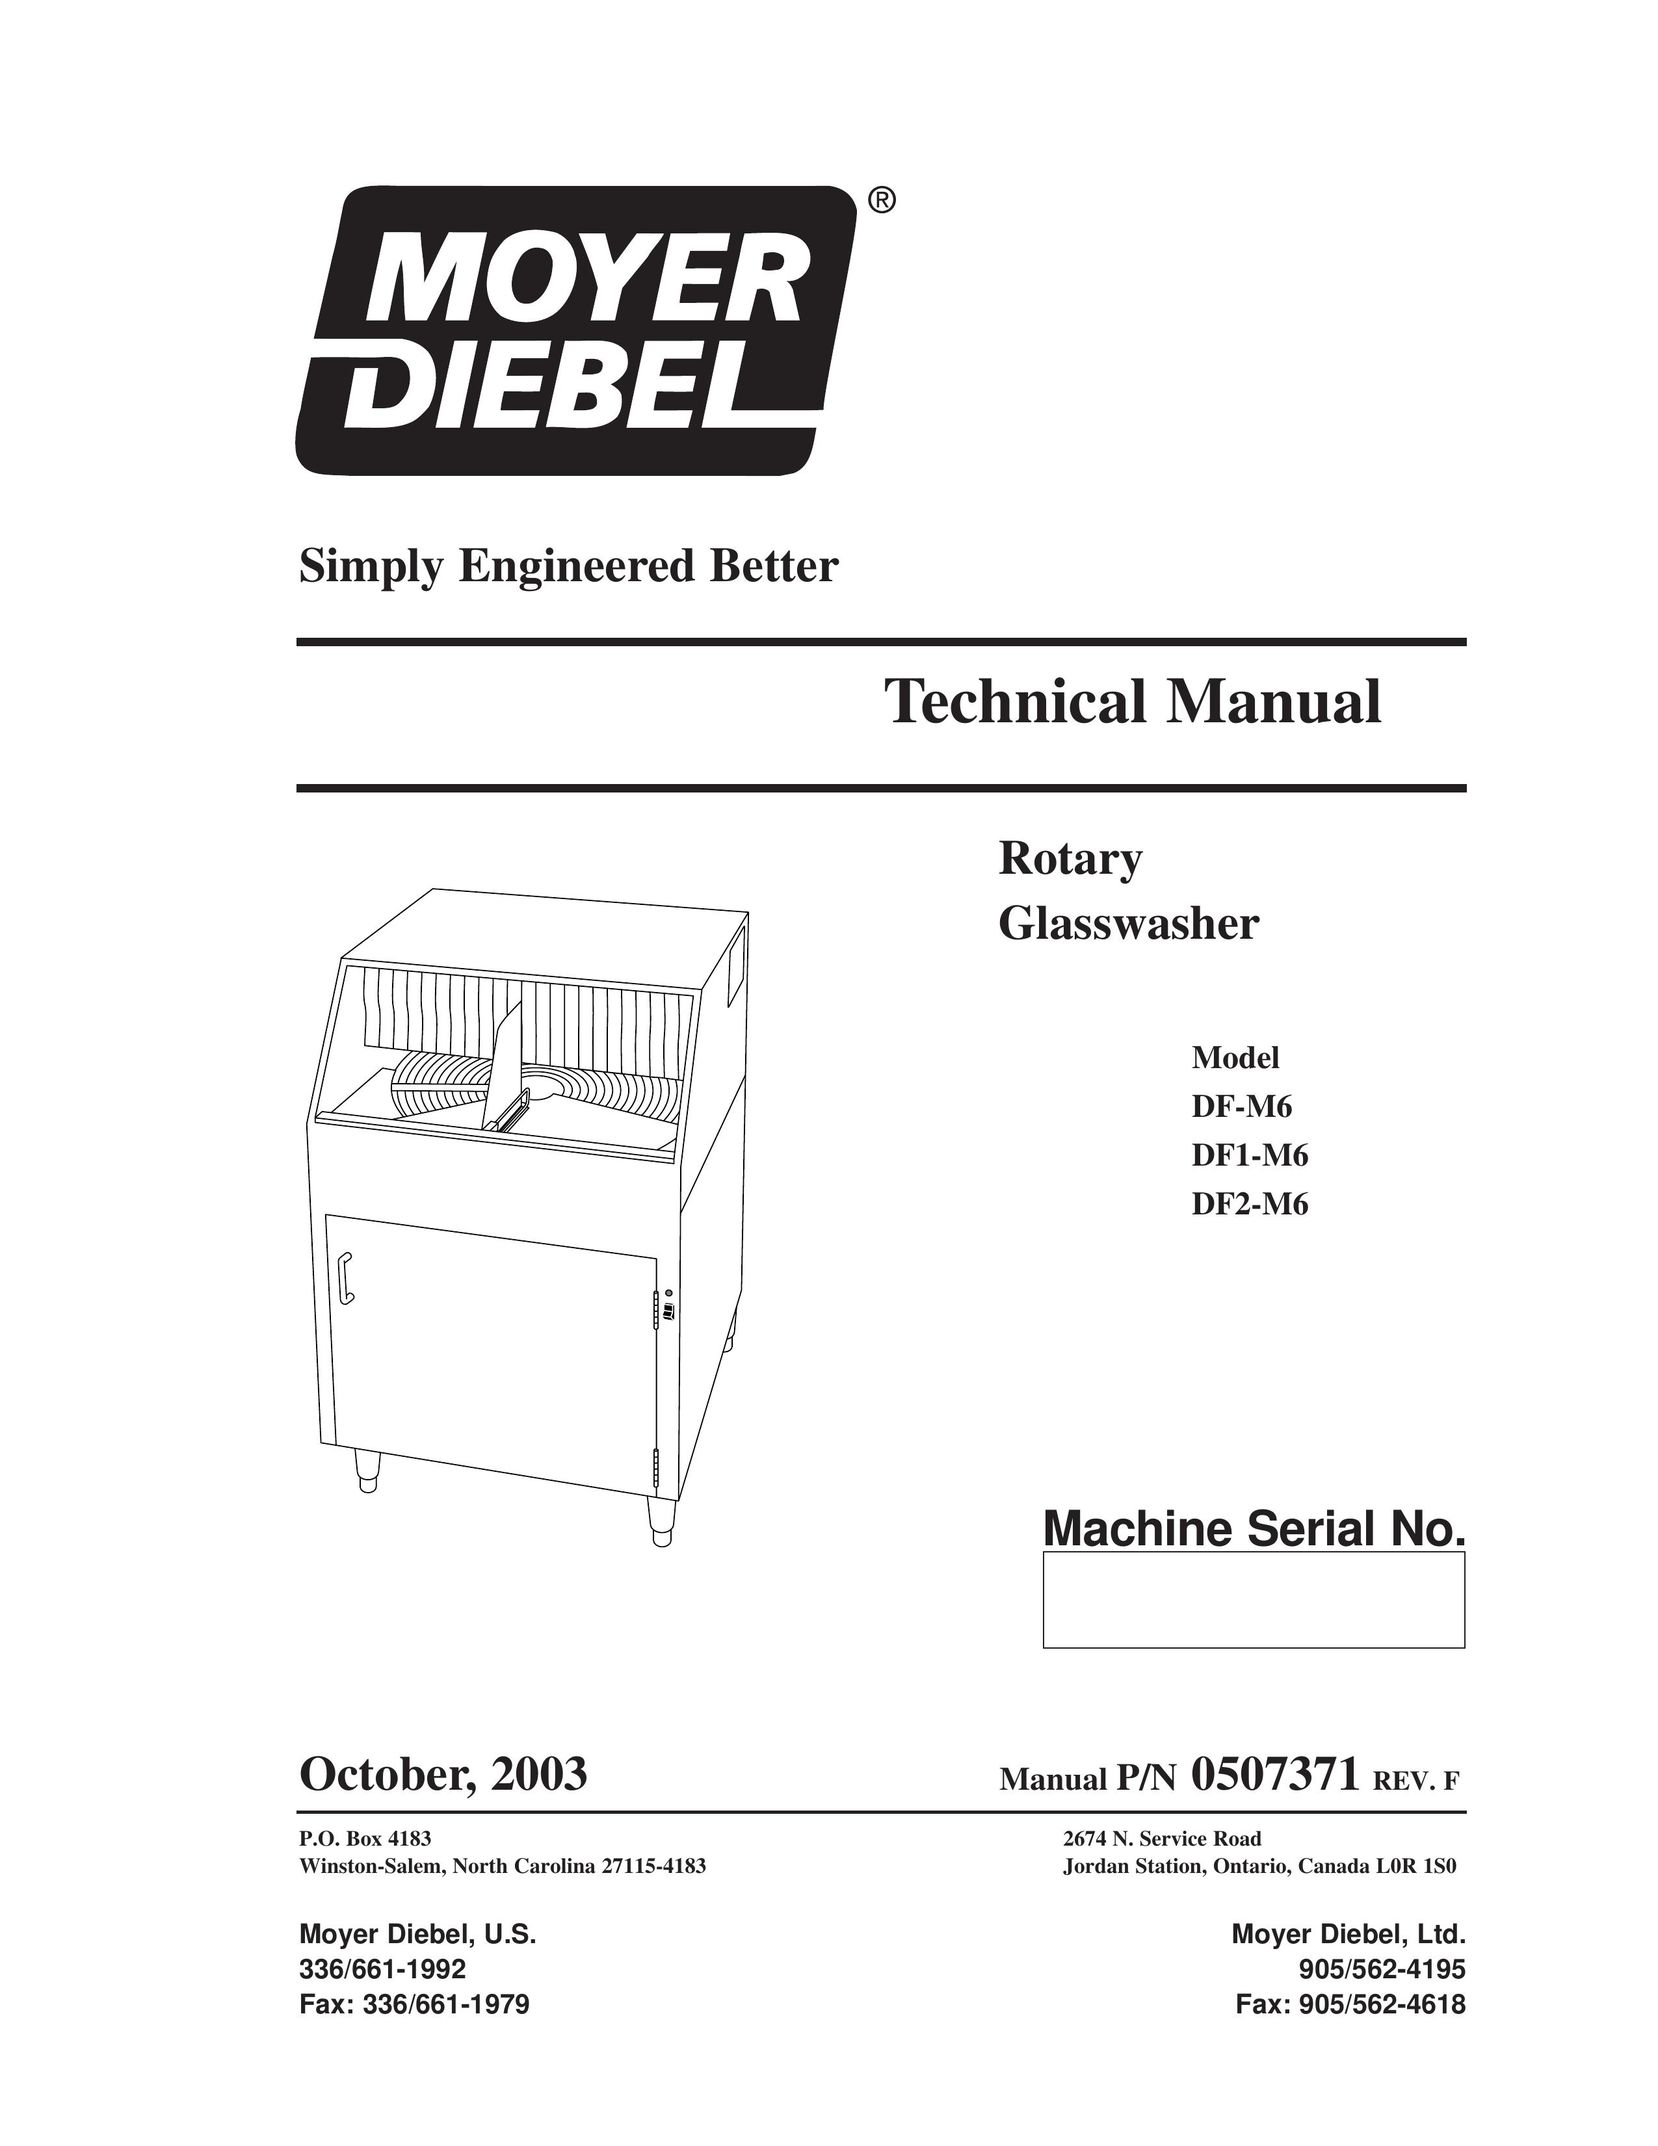 Moyer Diebel DF-M6 Dishwasher User Manual